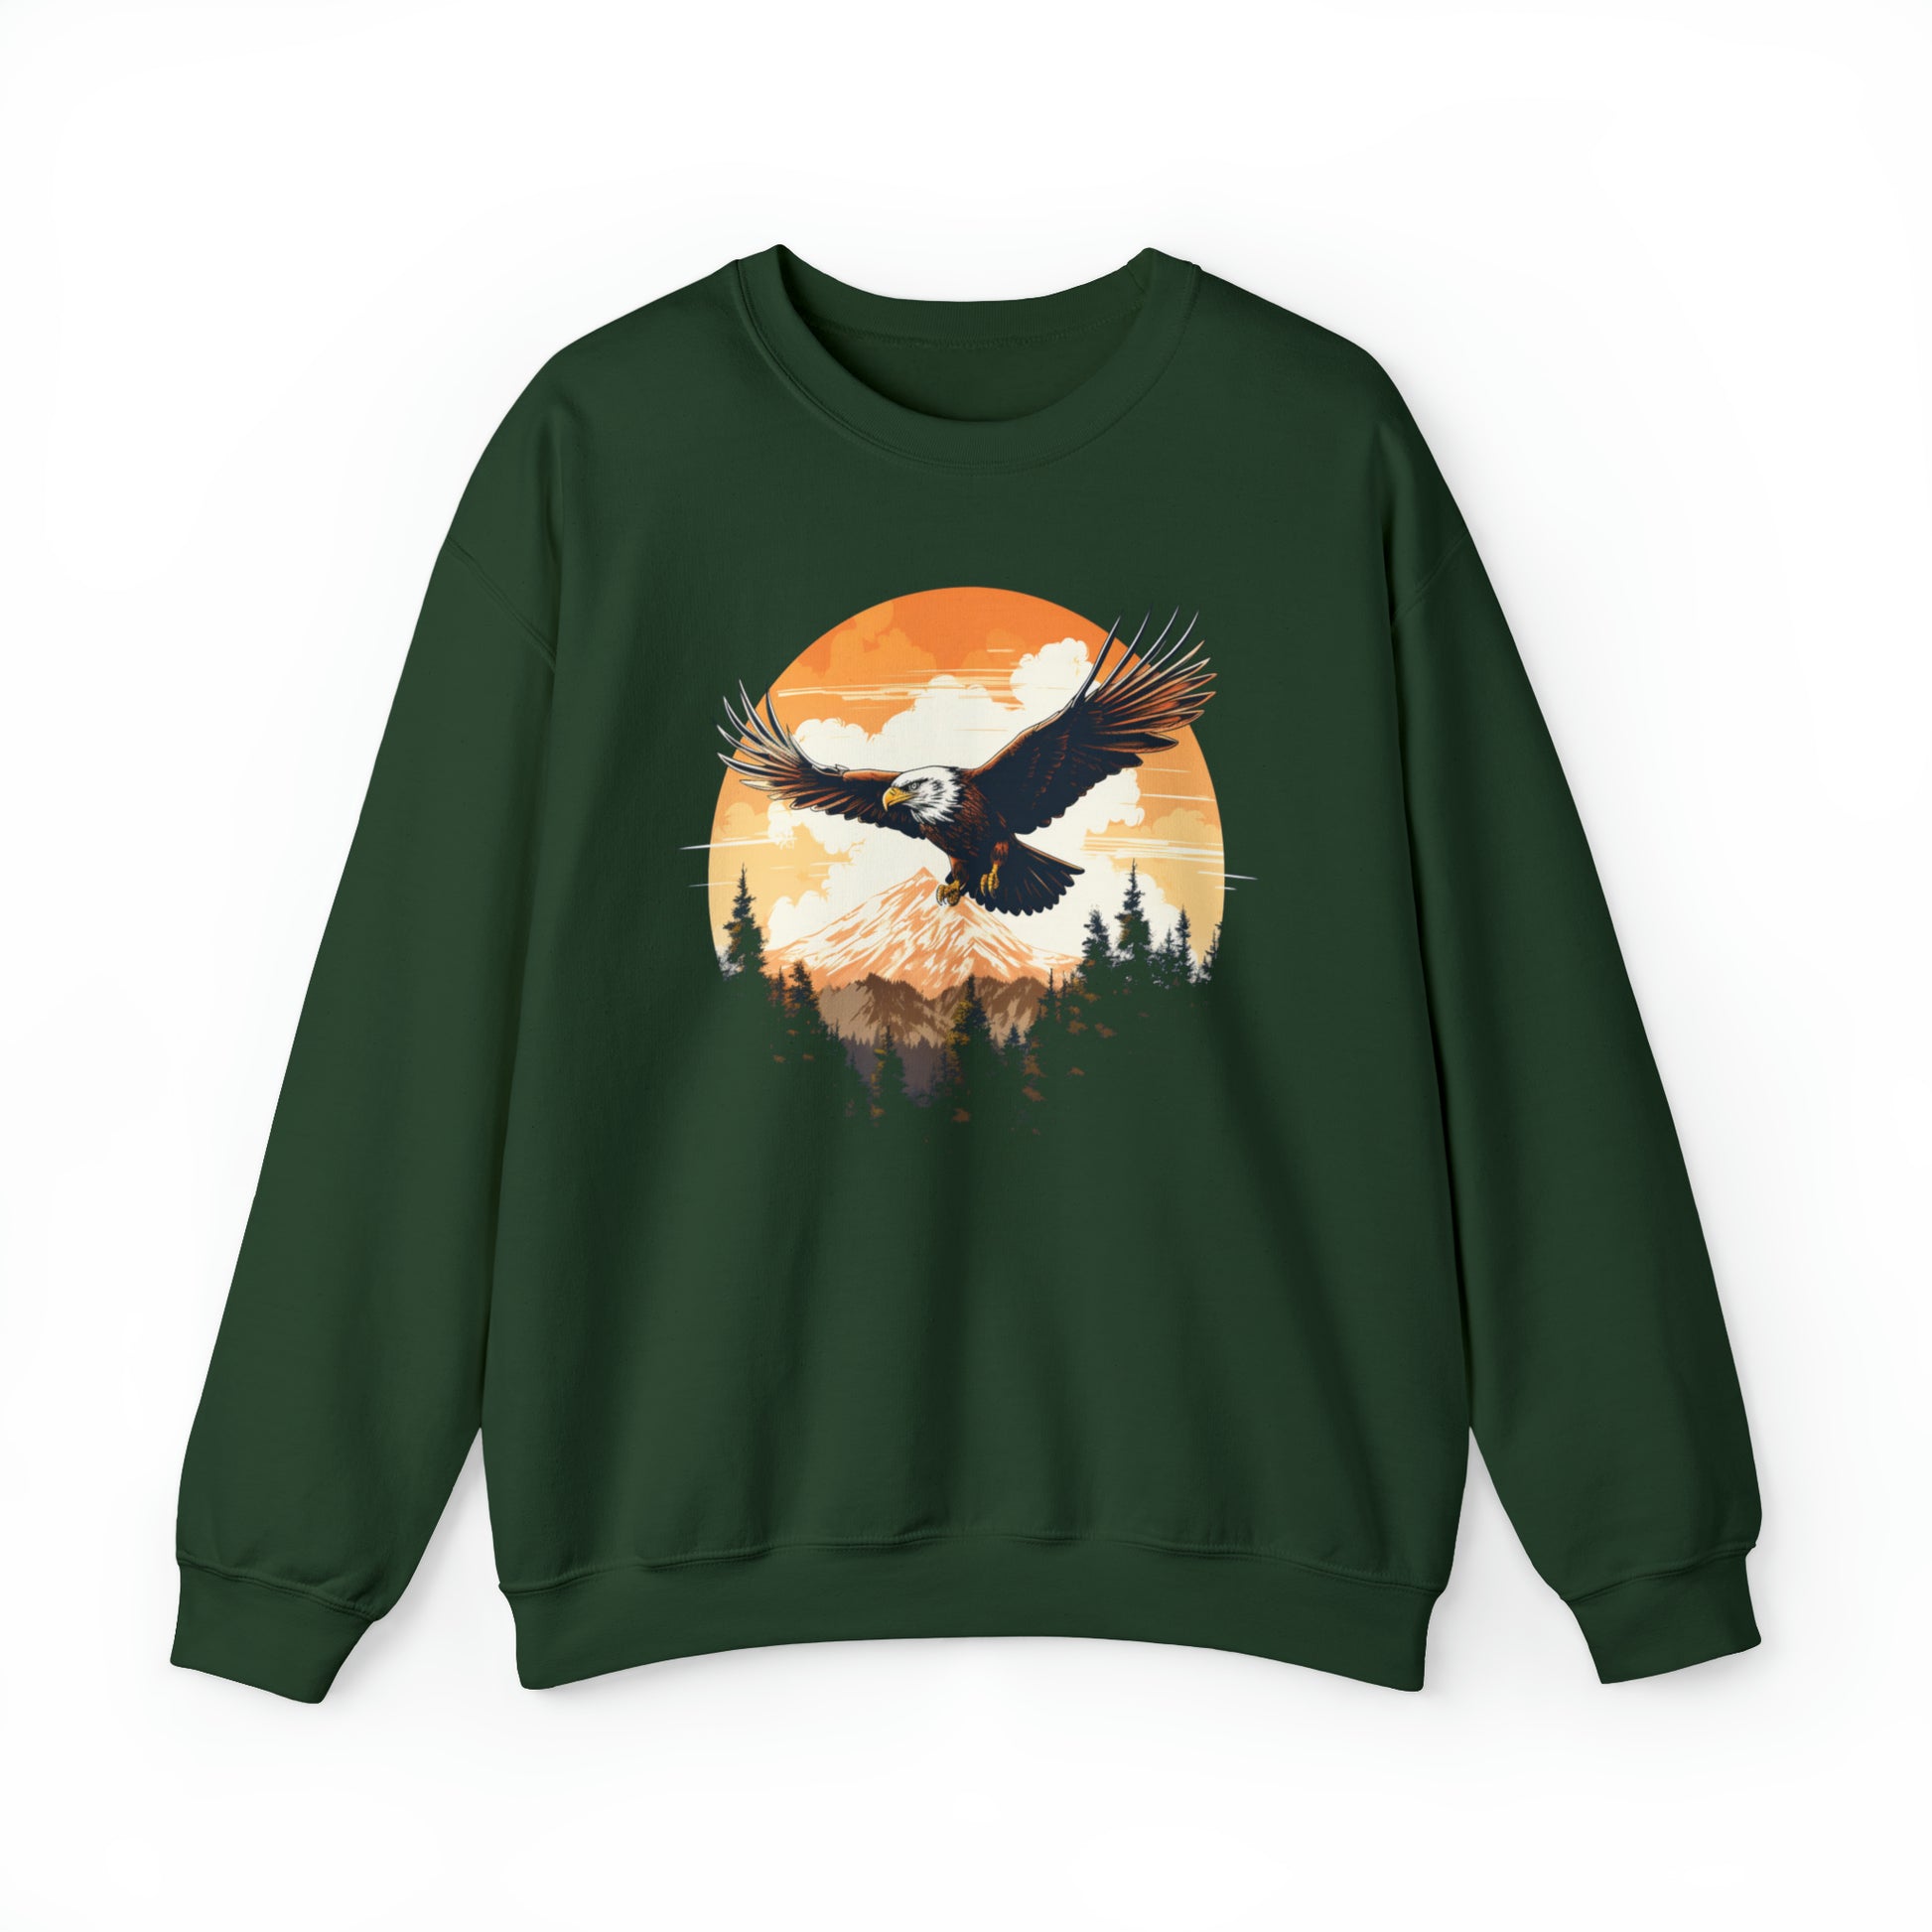 Flying Eagle Sweatshirt, Mountain Bird Trees Graphic Crewneck Fleece Cotton Sweater Jumper Pullover Men Women Adult Aesthetic Designer Top Starcove Fashion